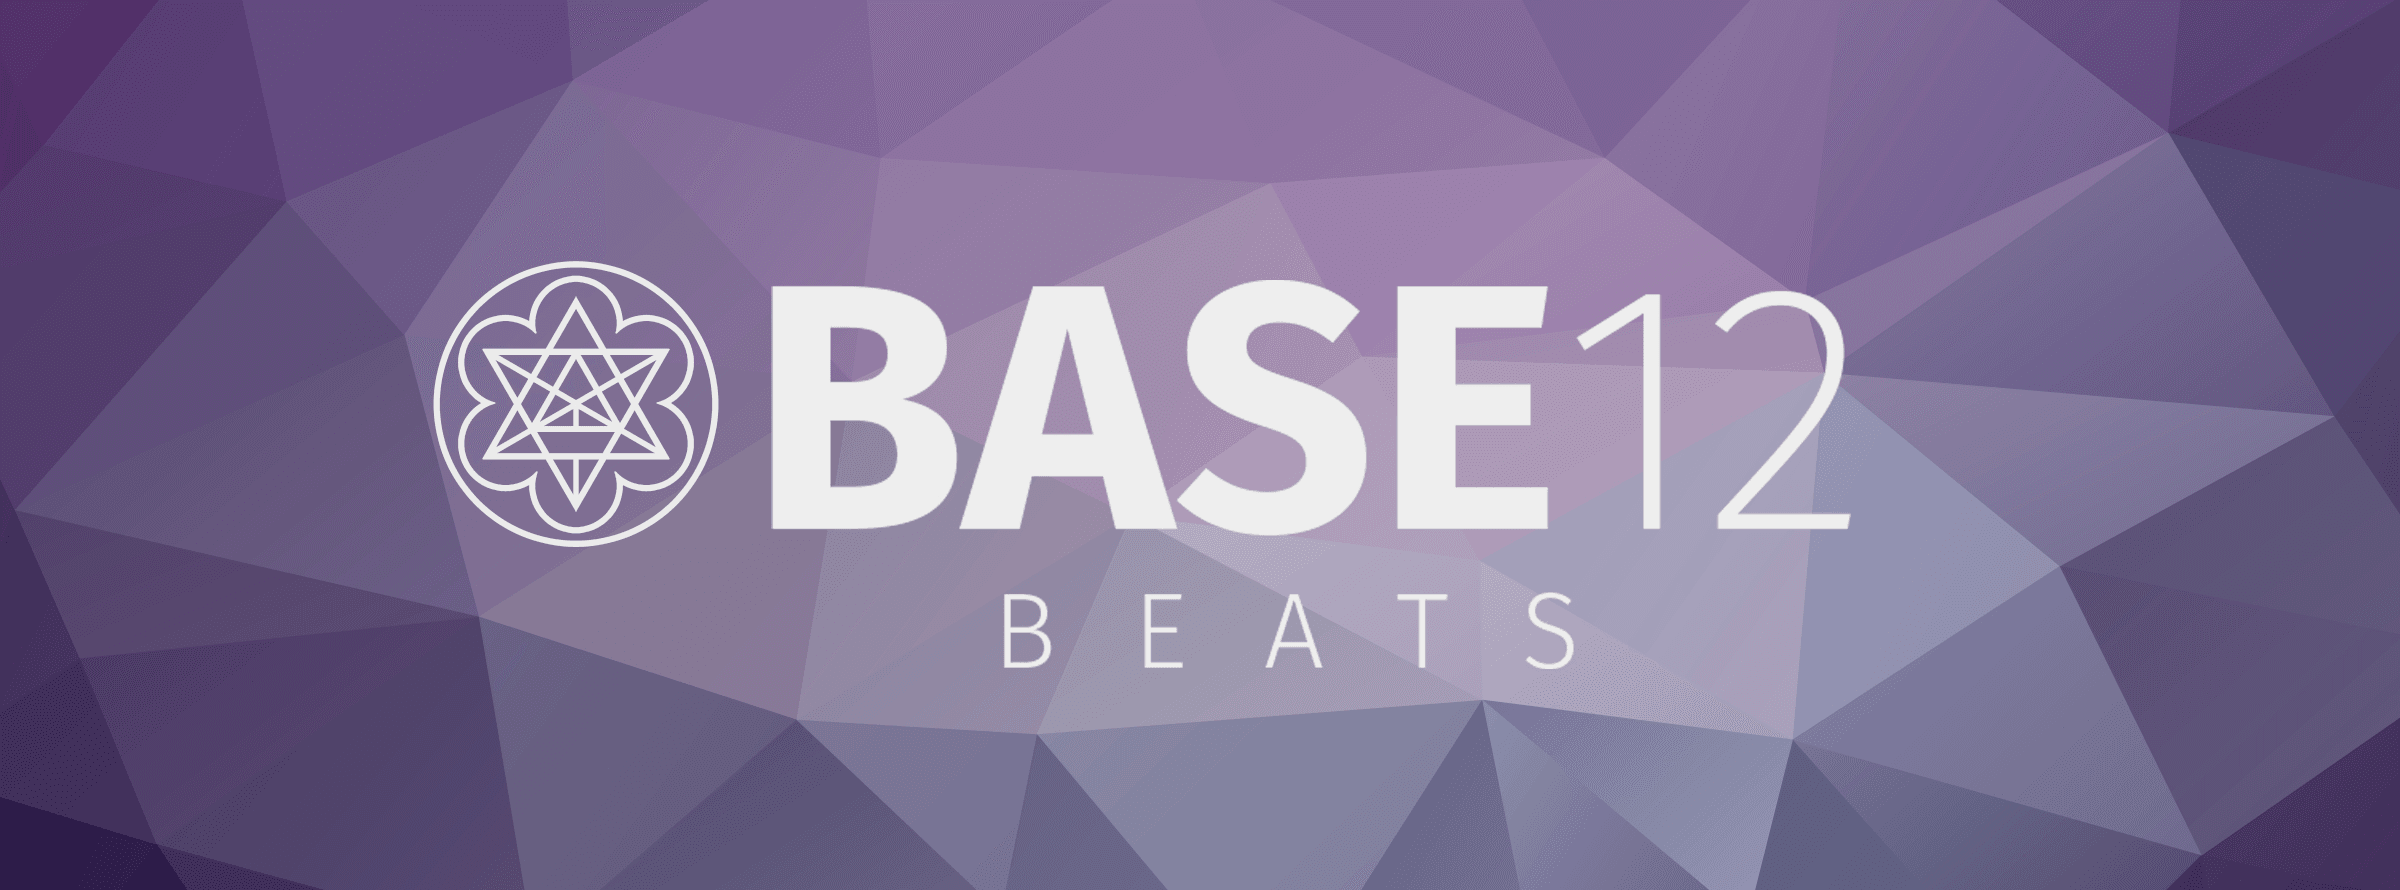 Base12Beats banner